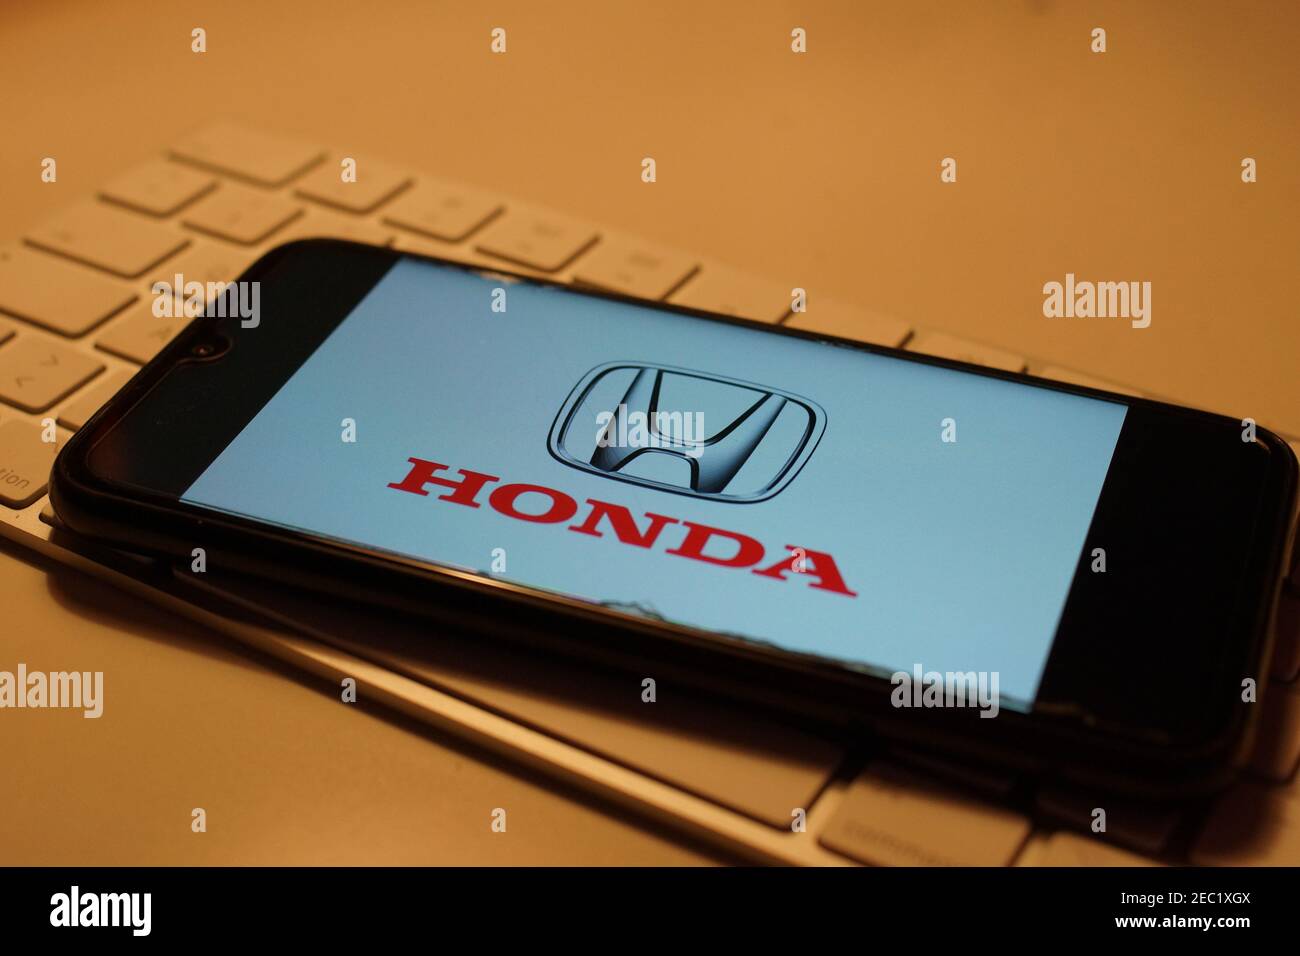 Smartphone with Honda logo on computer keyboard Stock Photo